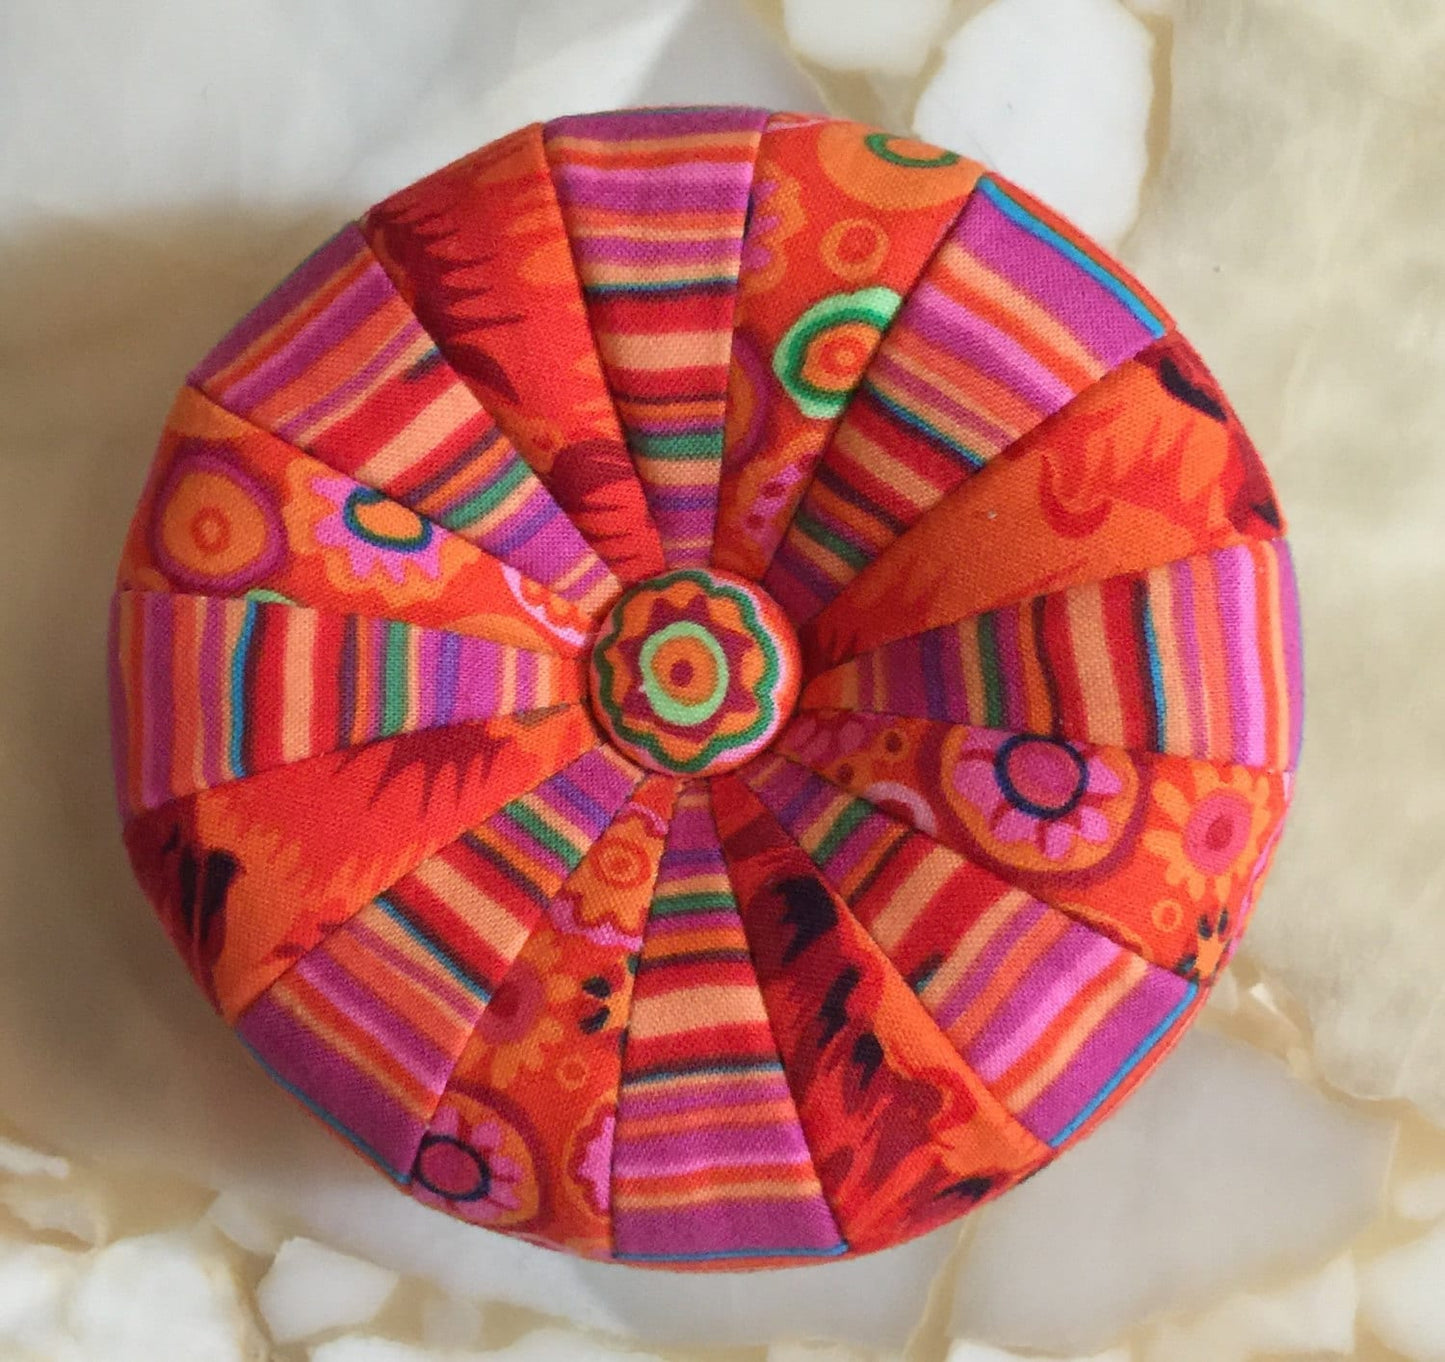 4" TUFFET PINCUSHION KIT  by Sew Colorful